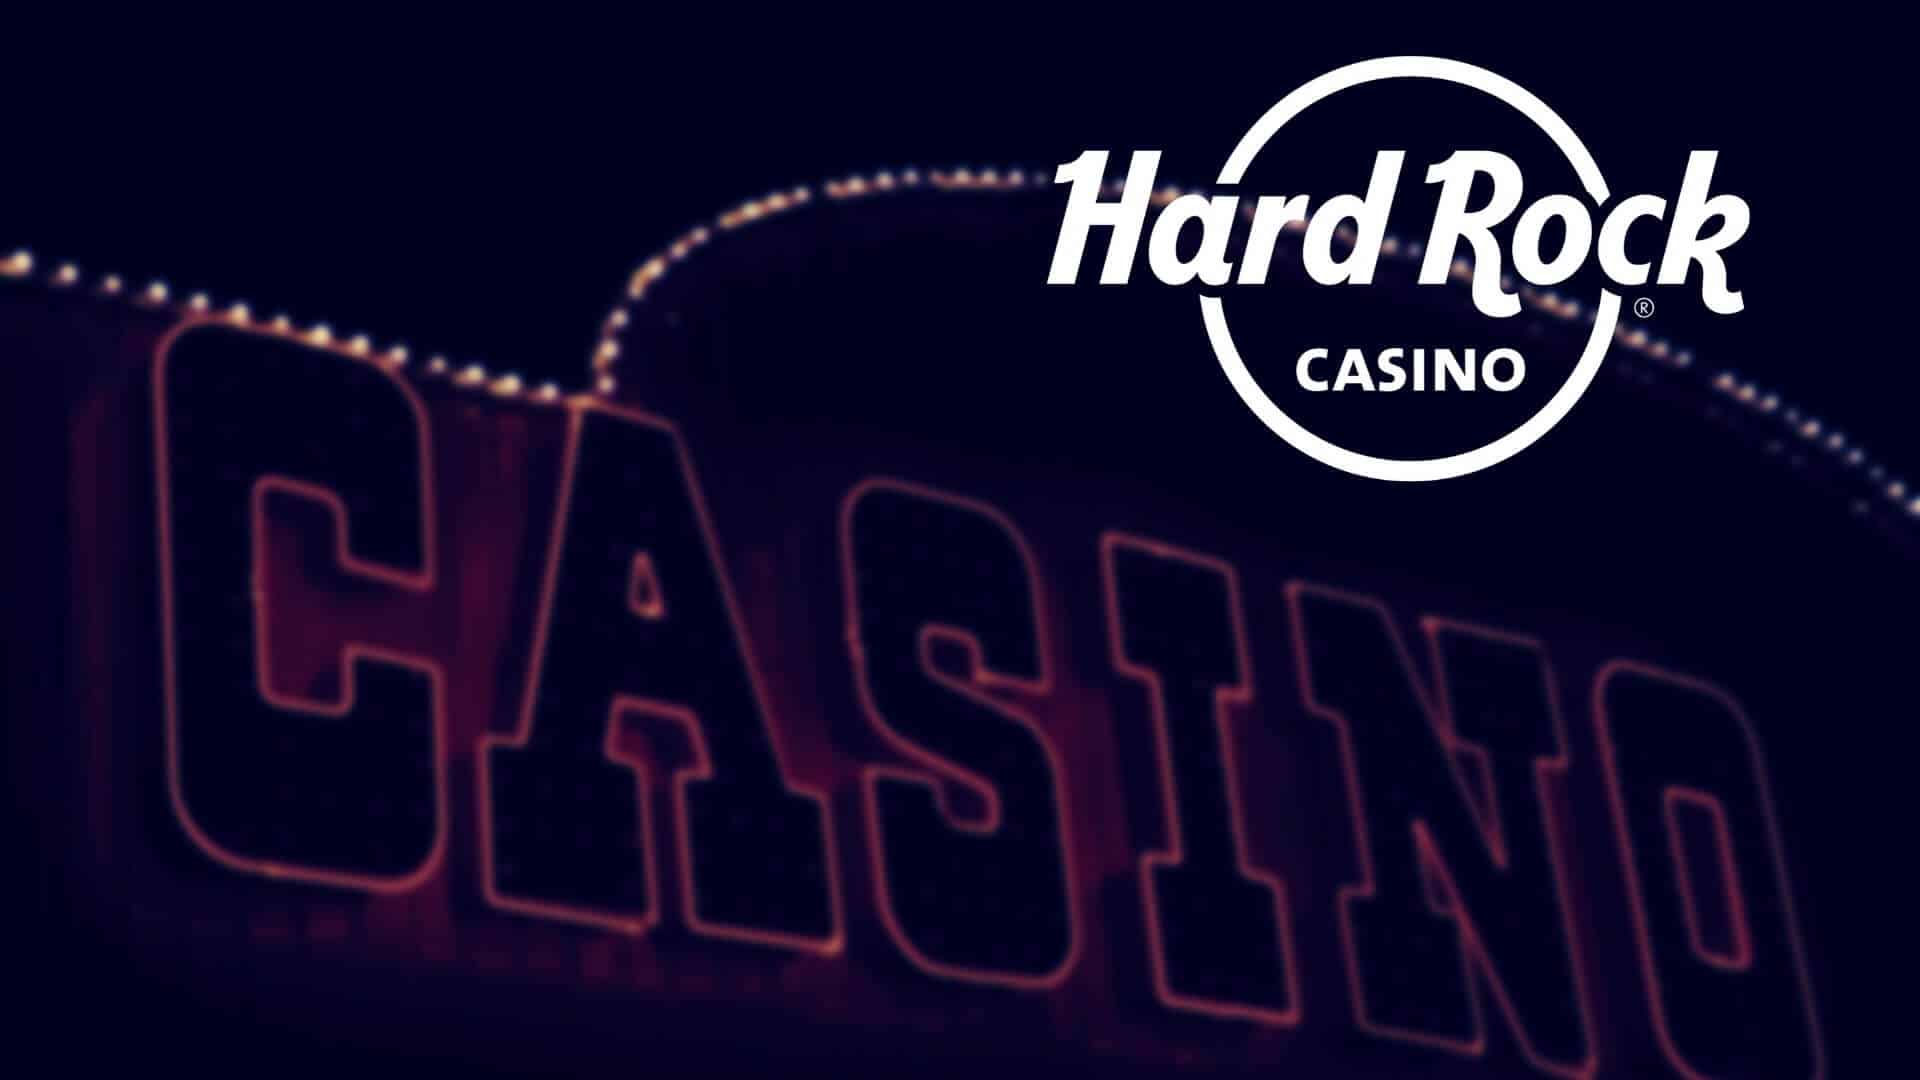 hard rock casino jobs gary indiana